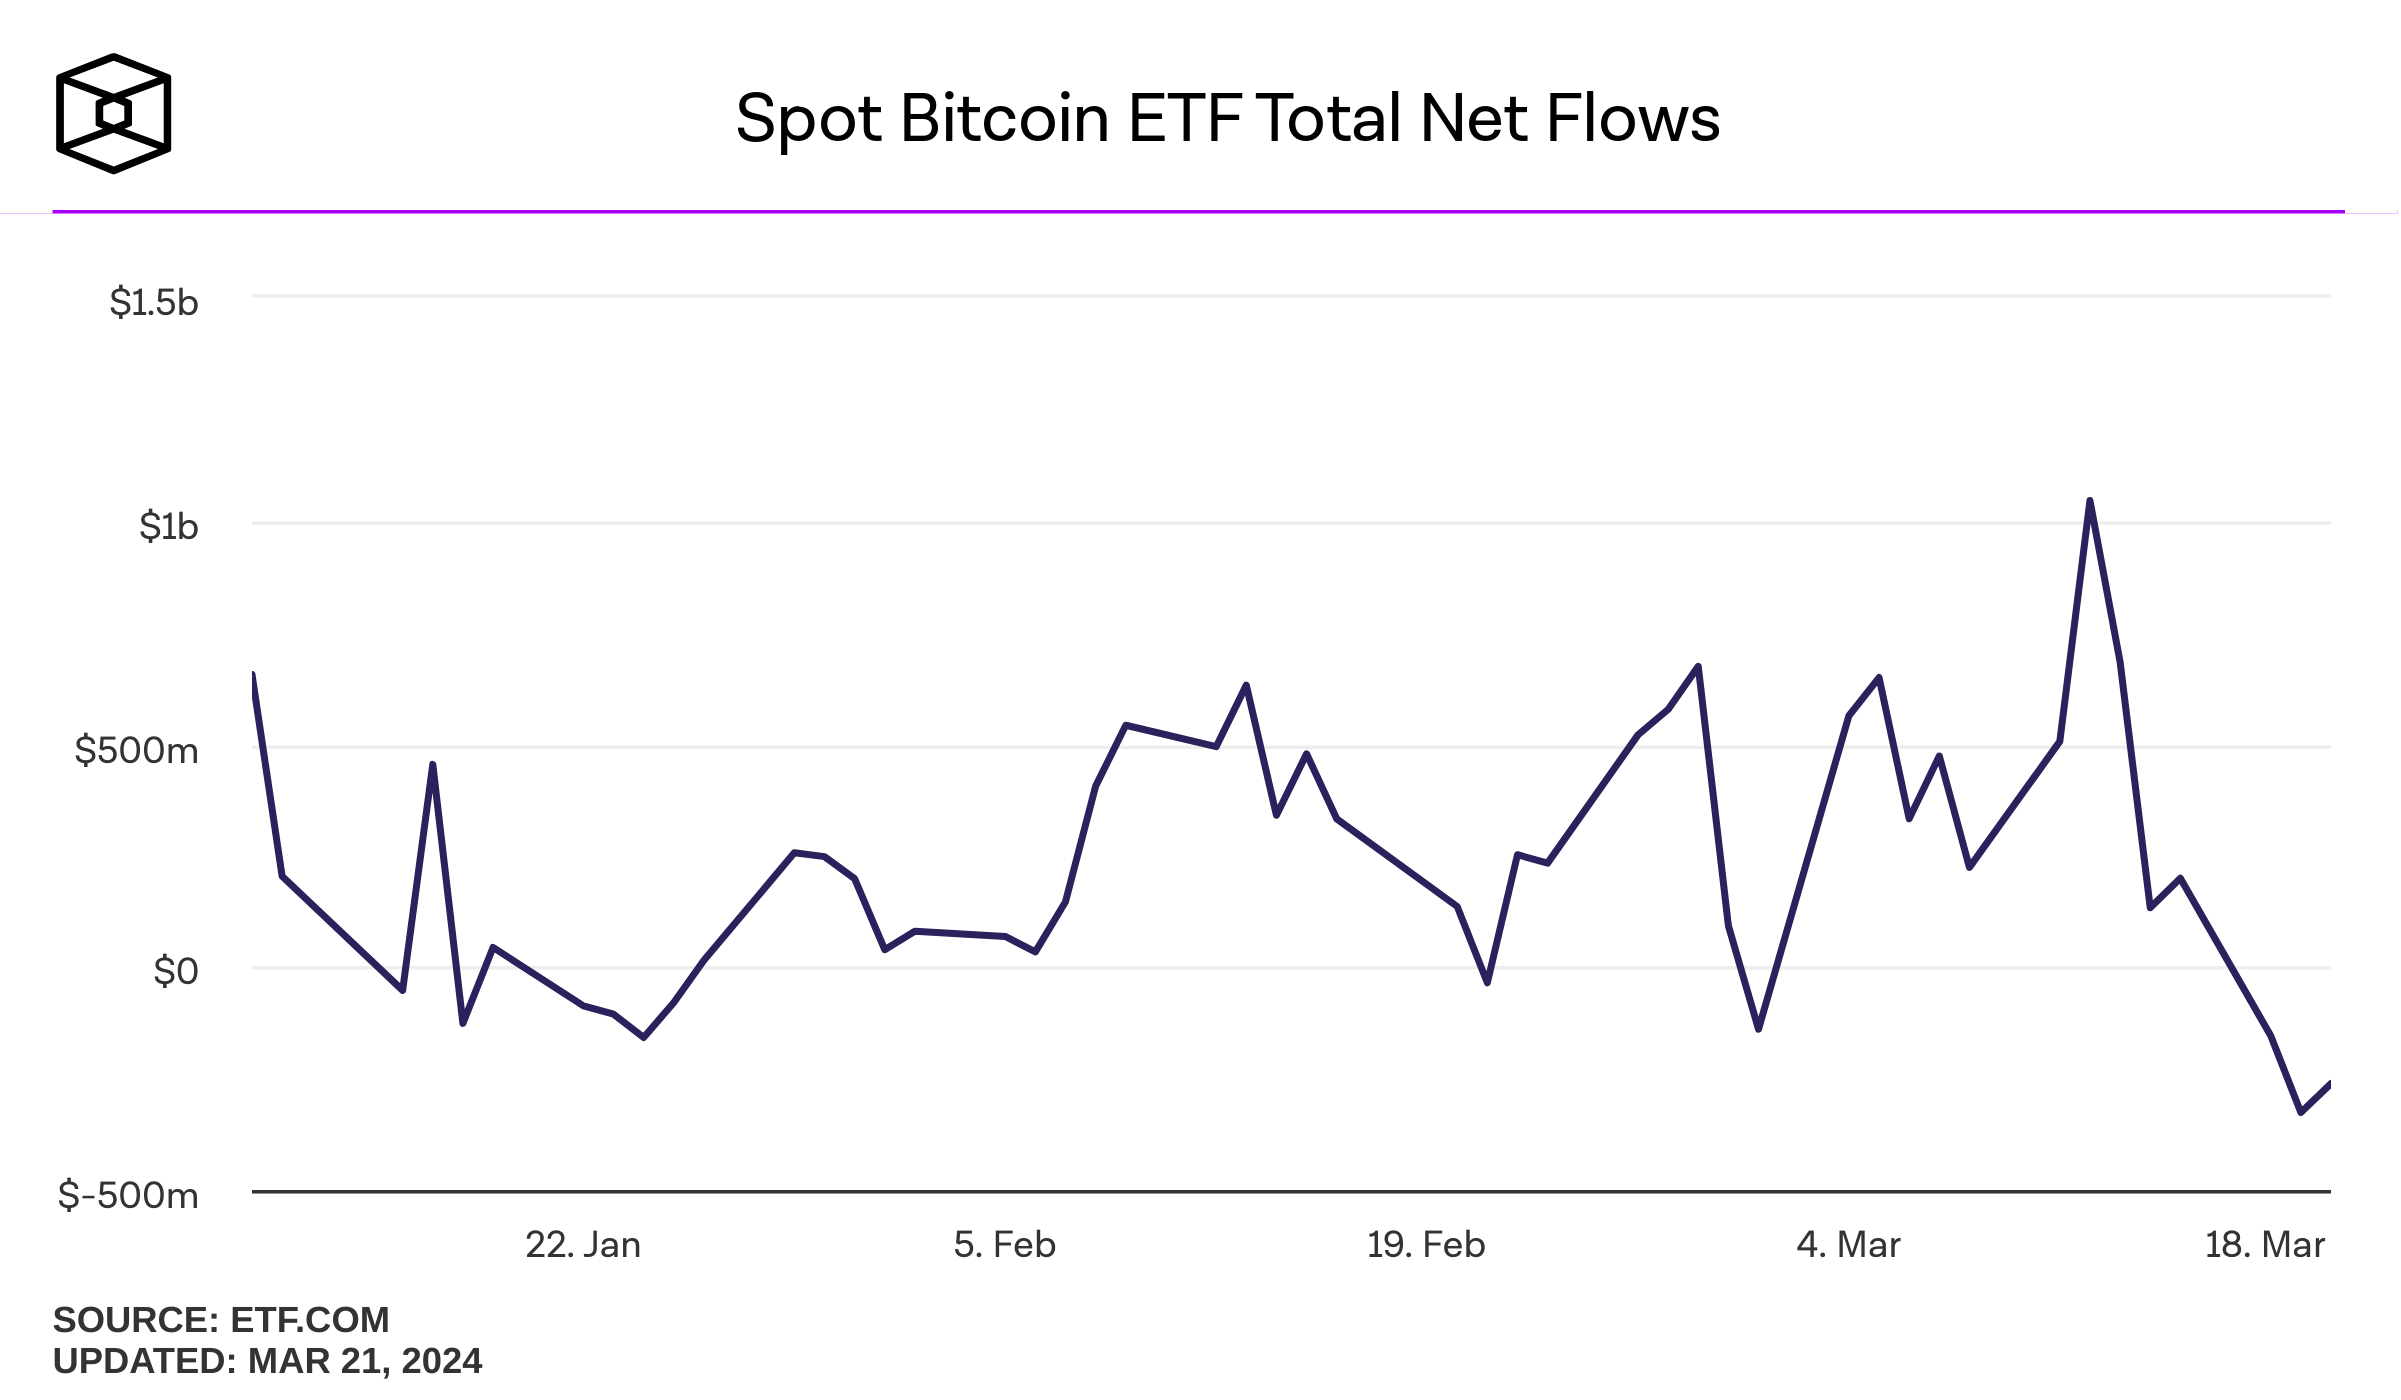 Spotting Bitcoin ETF Net Flows 